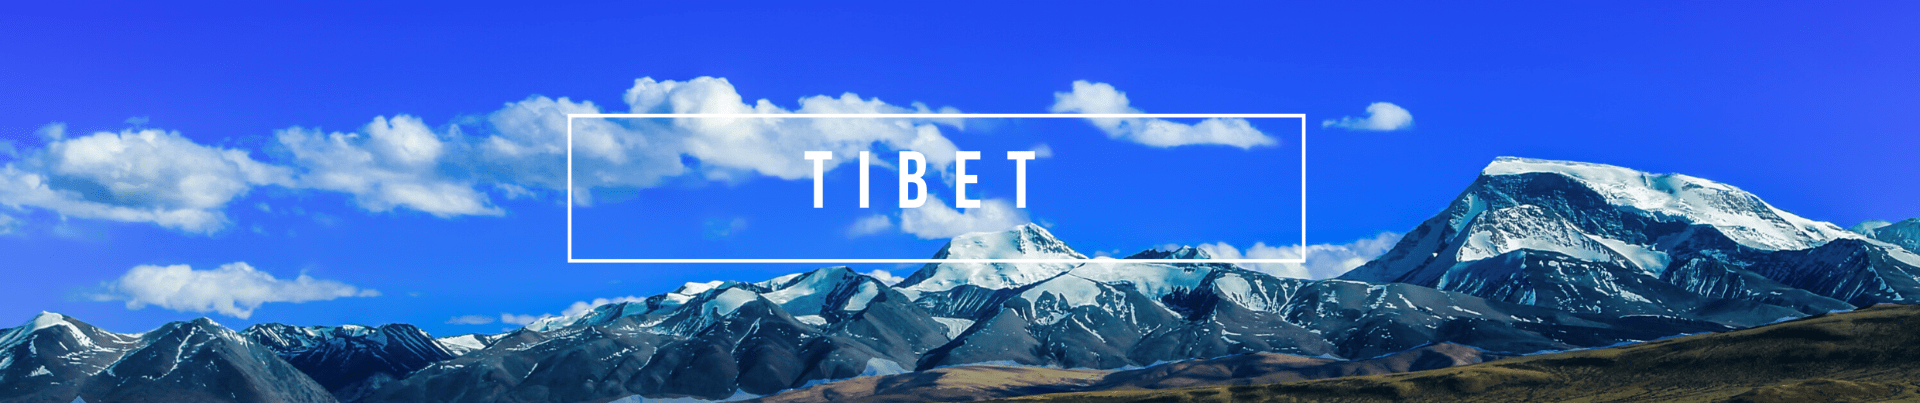 banner with stock image of Tibetan mountains; text: Tibet